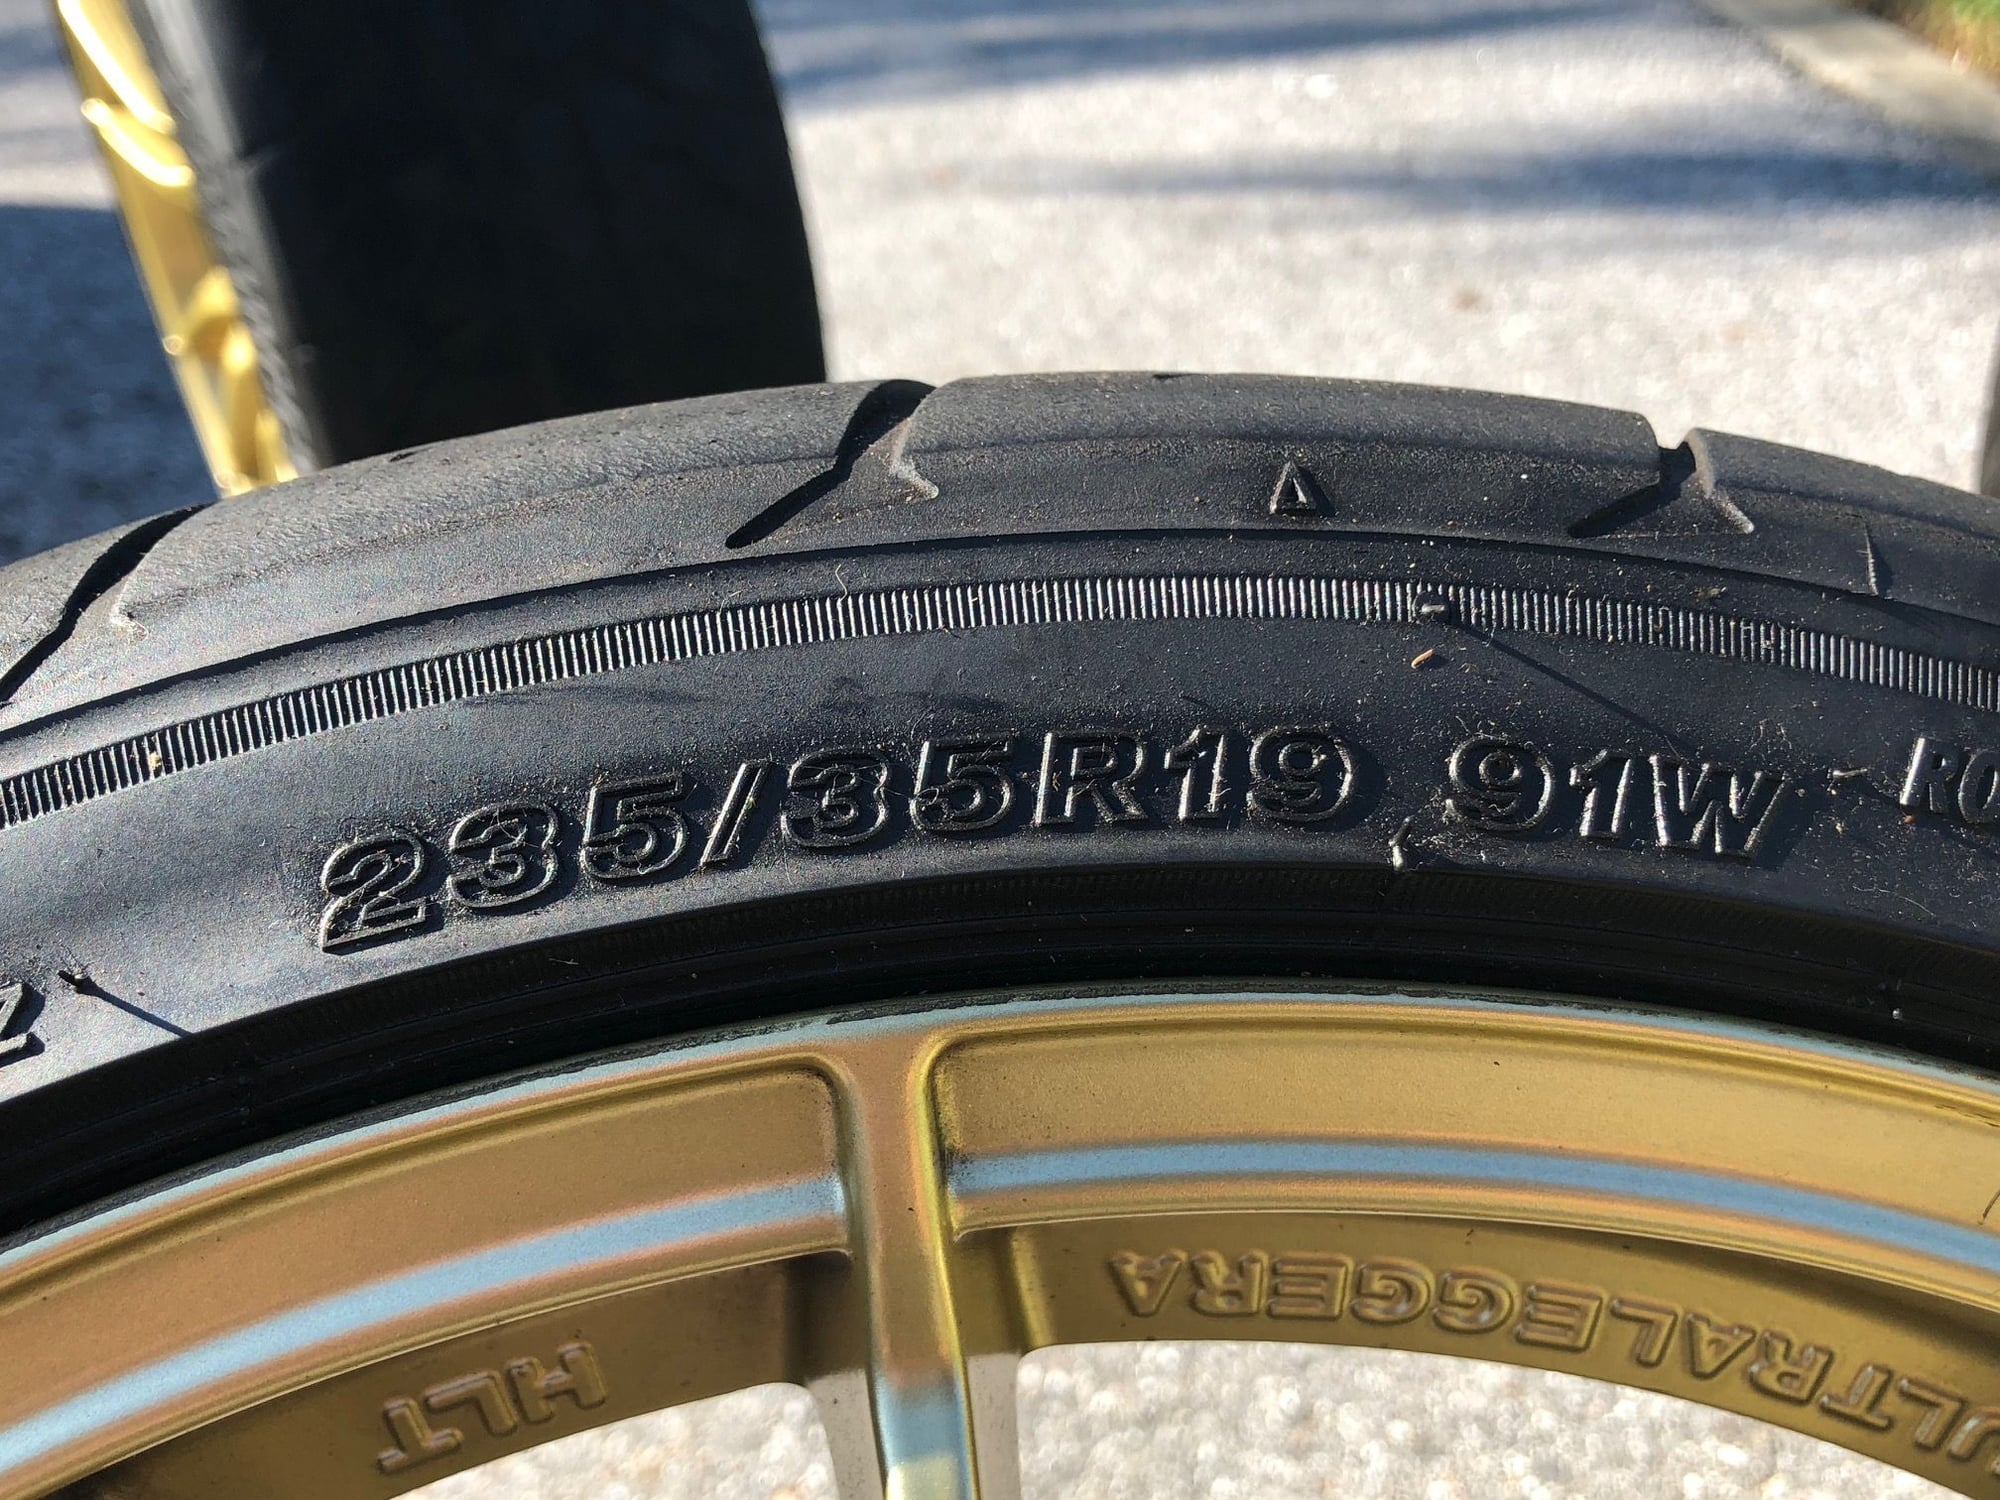 Wheels and Tires/Axles - FS: OZ Ultraleggera Gold 19" w/ Potenza RE-71R Tires - Used - Venice, FL 34285, United States